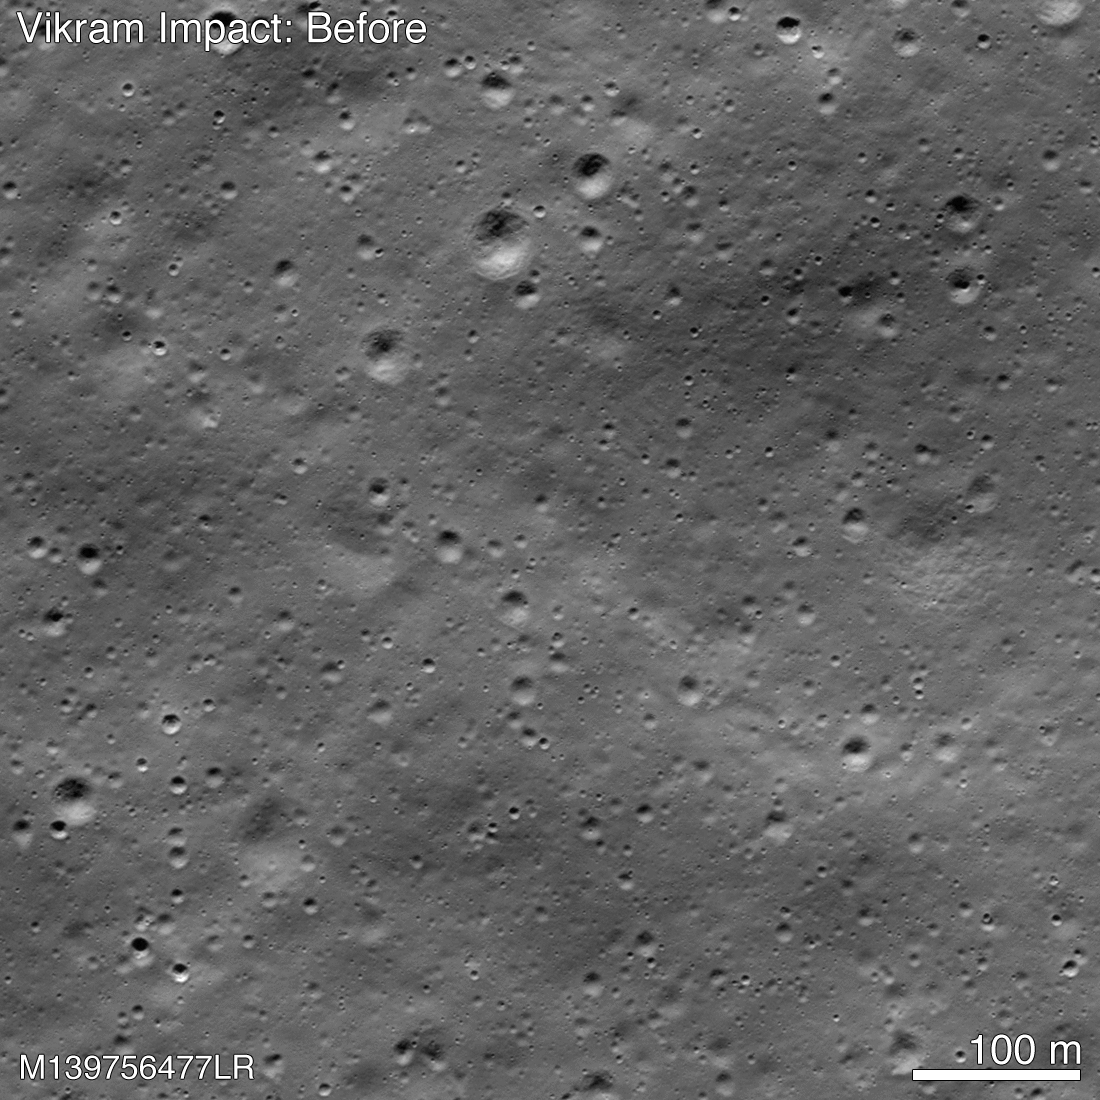 Vikram Lander Found Lunar Reconnaissance Orbiter Camera